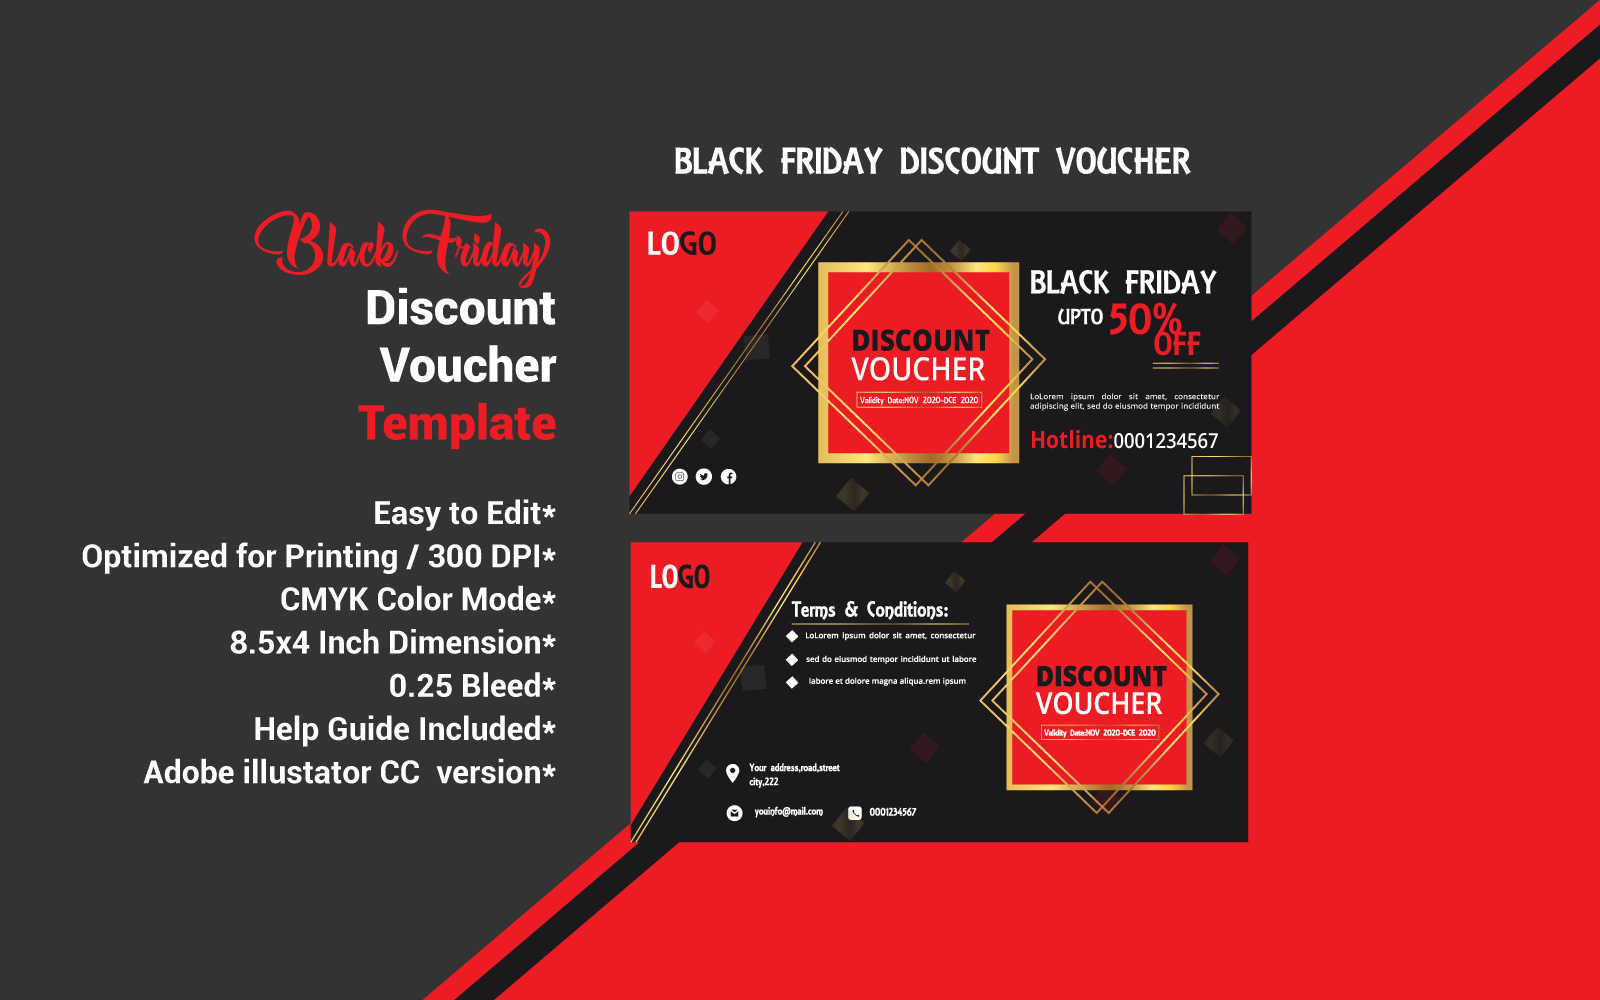 Black Friday Discount Voucher - Vector Image